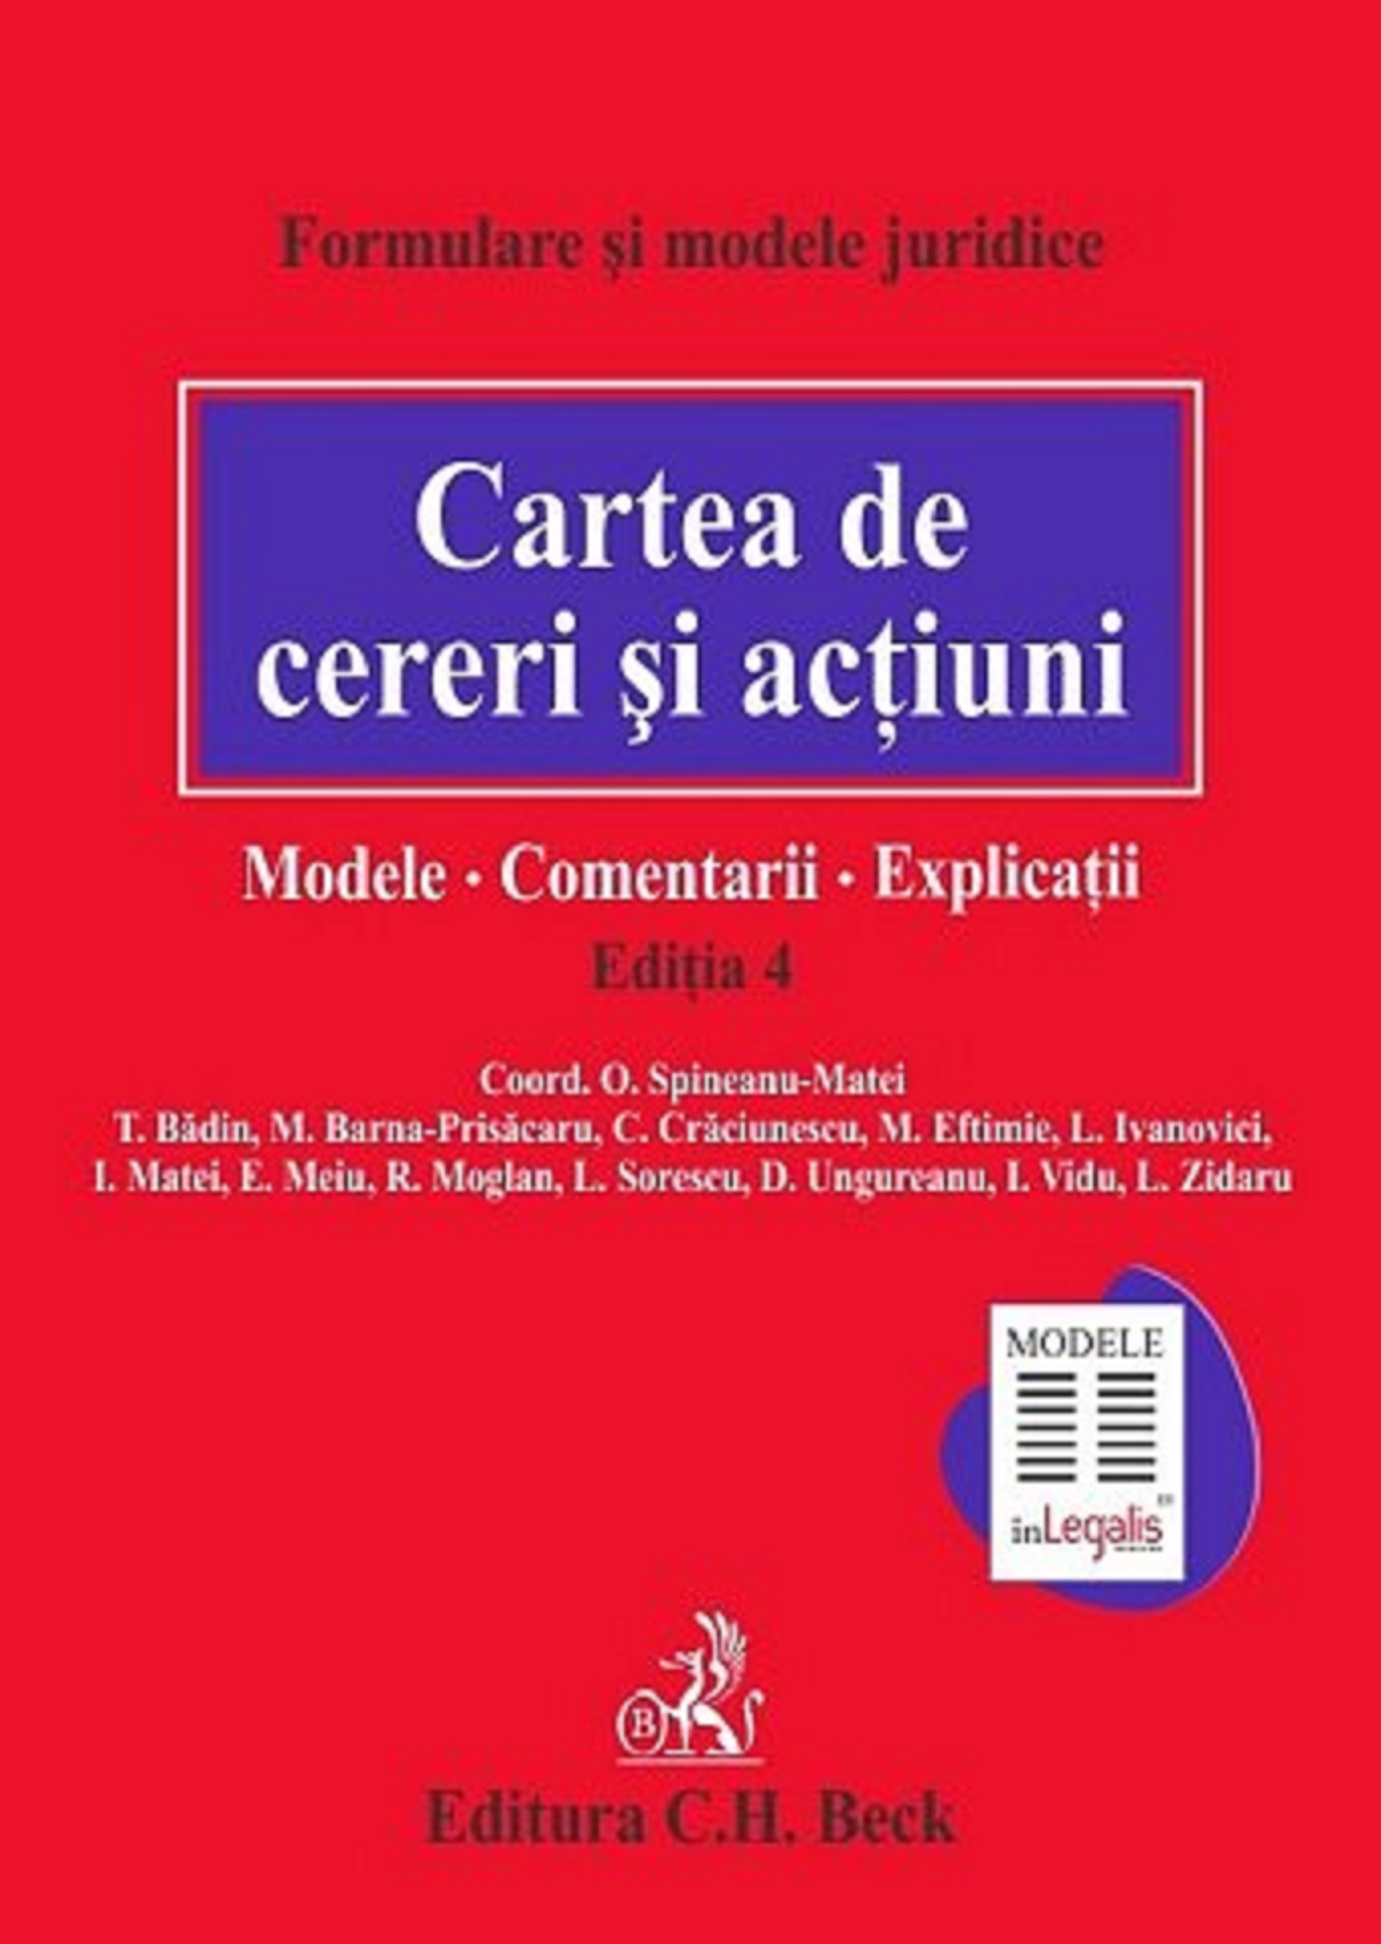 Cartea de cereri si actiuni. Modele | T. Badin, M. Barna-Prisacaru, M. Eftimie C.H. Beck